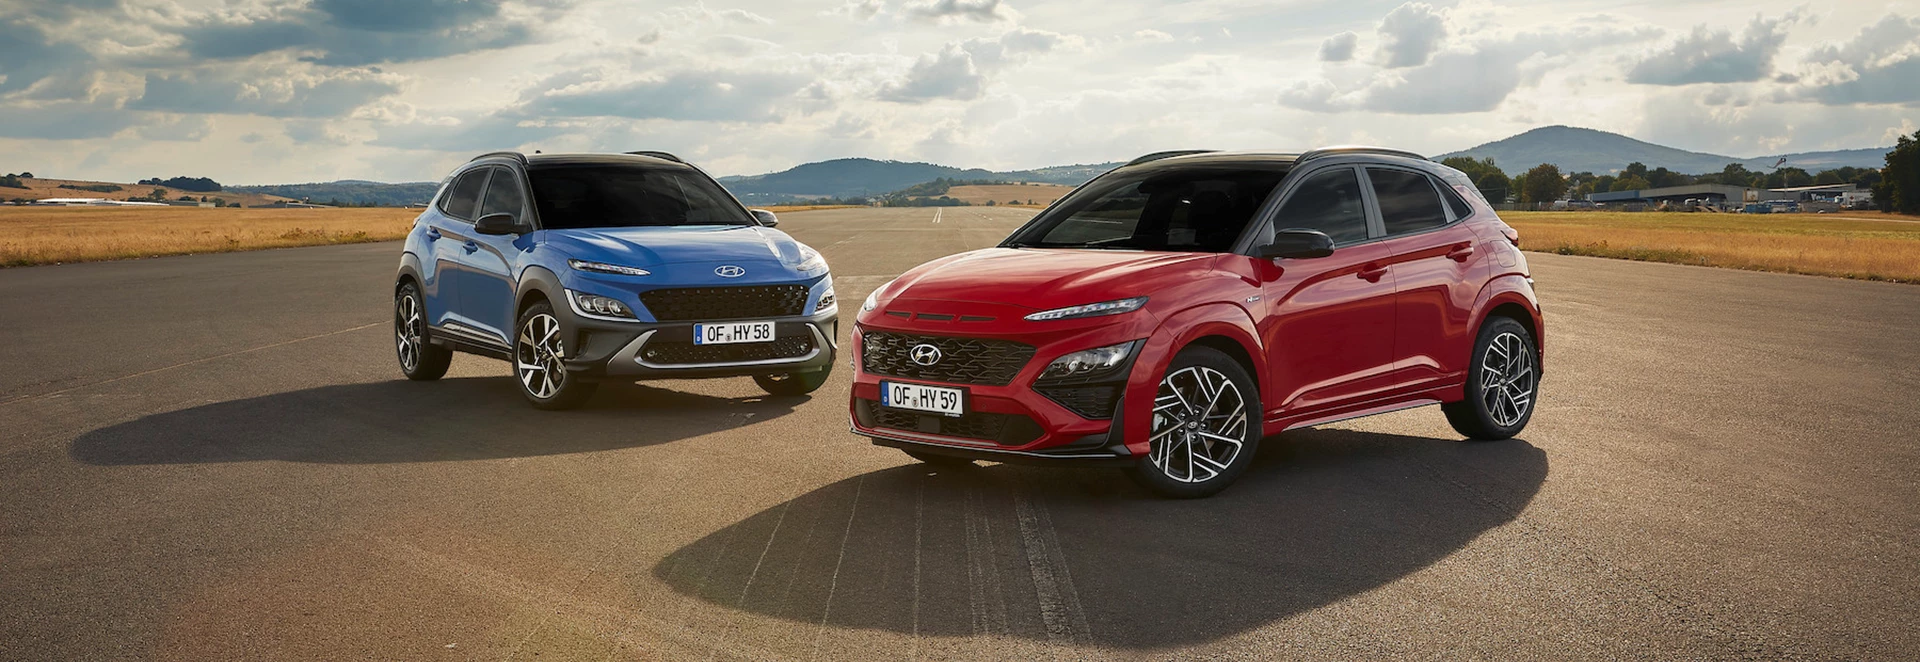 Hyundai range: What’s available? 